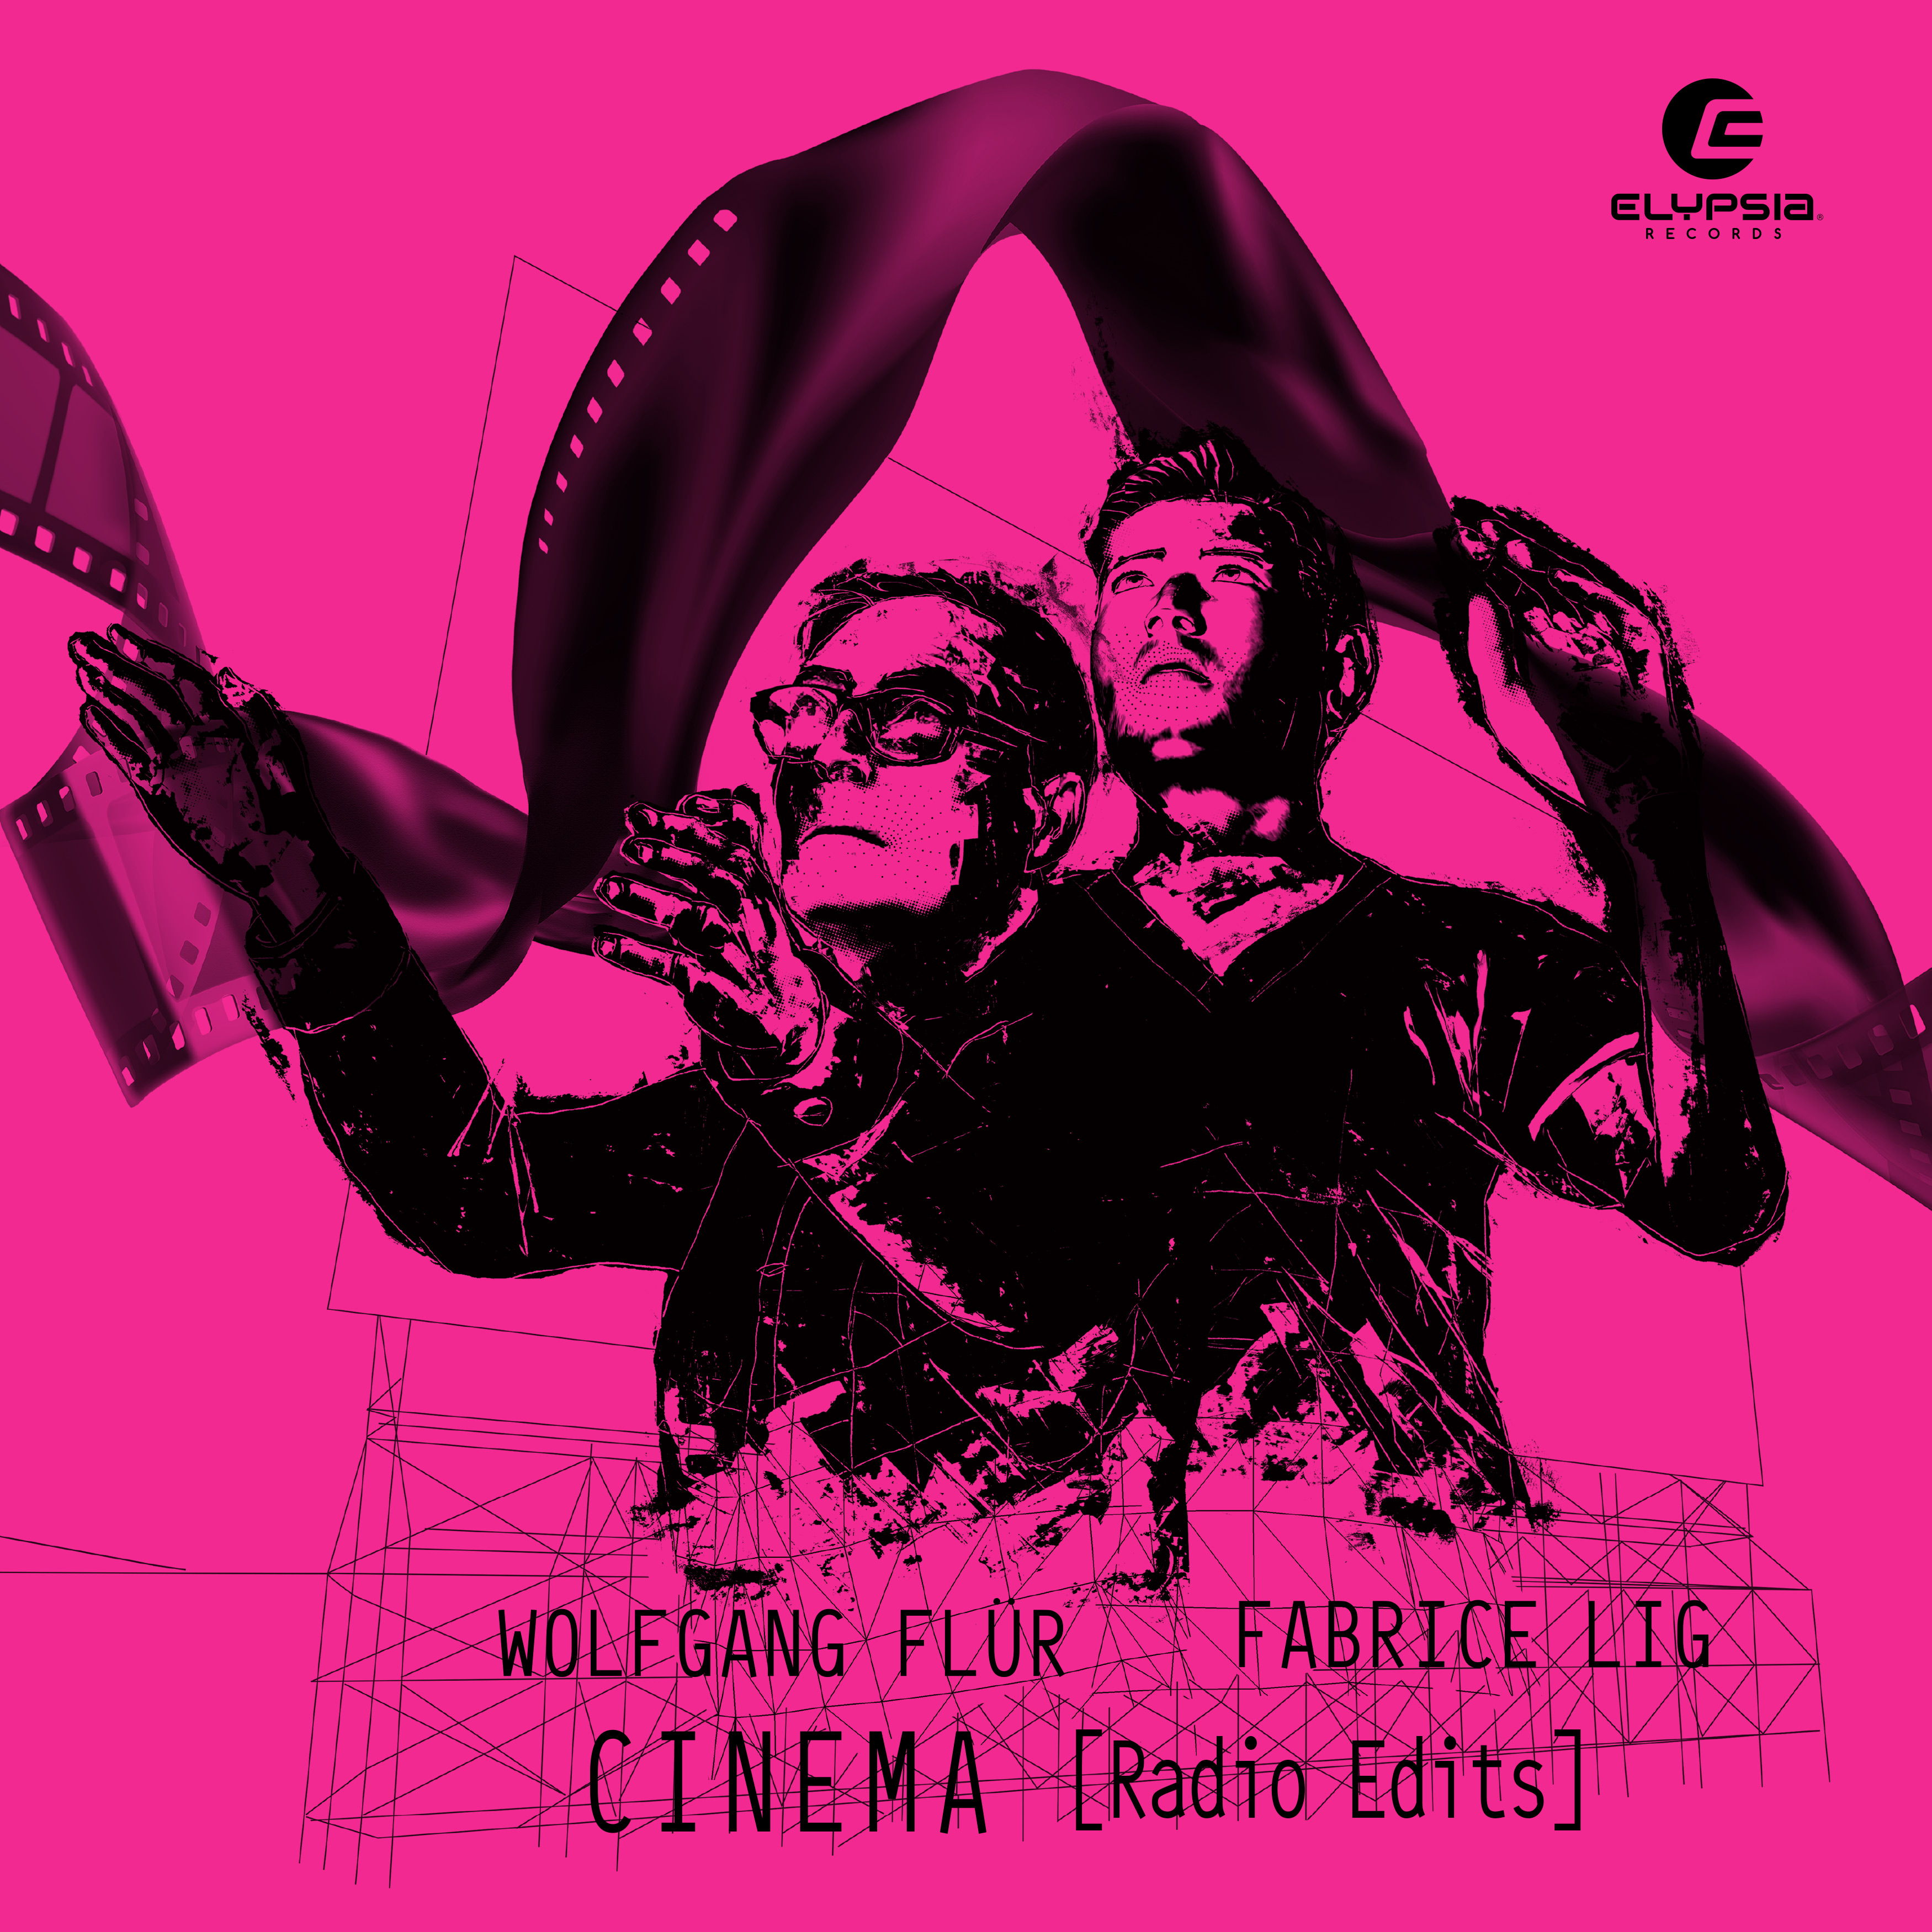 JPG ELY098 COVER Fabrice Lig CINEMA RADIO EDITS BIG SIZE.jpg (1.90 MB)